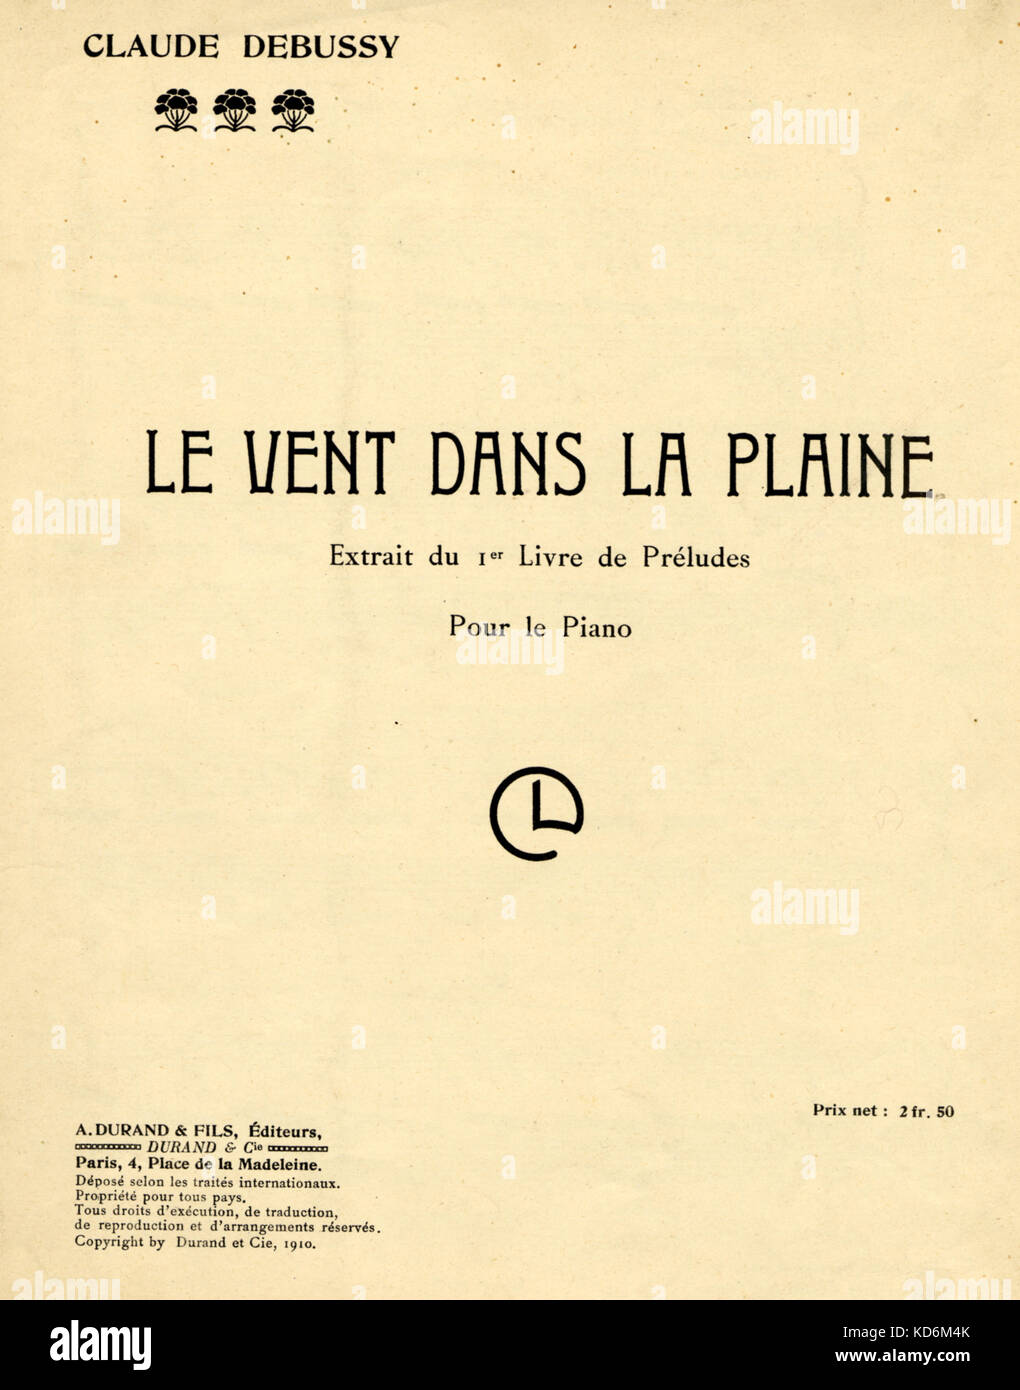 Claude Debussy's "Le Vent dans la Plaine", Partitur für Klavier. Auszug aus dem ersten Buch der Präludien veröffentlicht Paris, A. Durand & Fils, 1910. Stockfoto